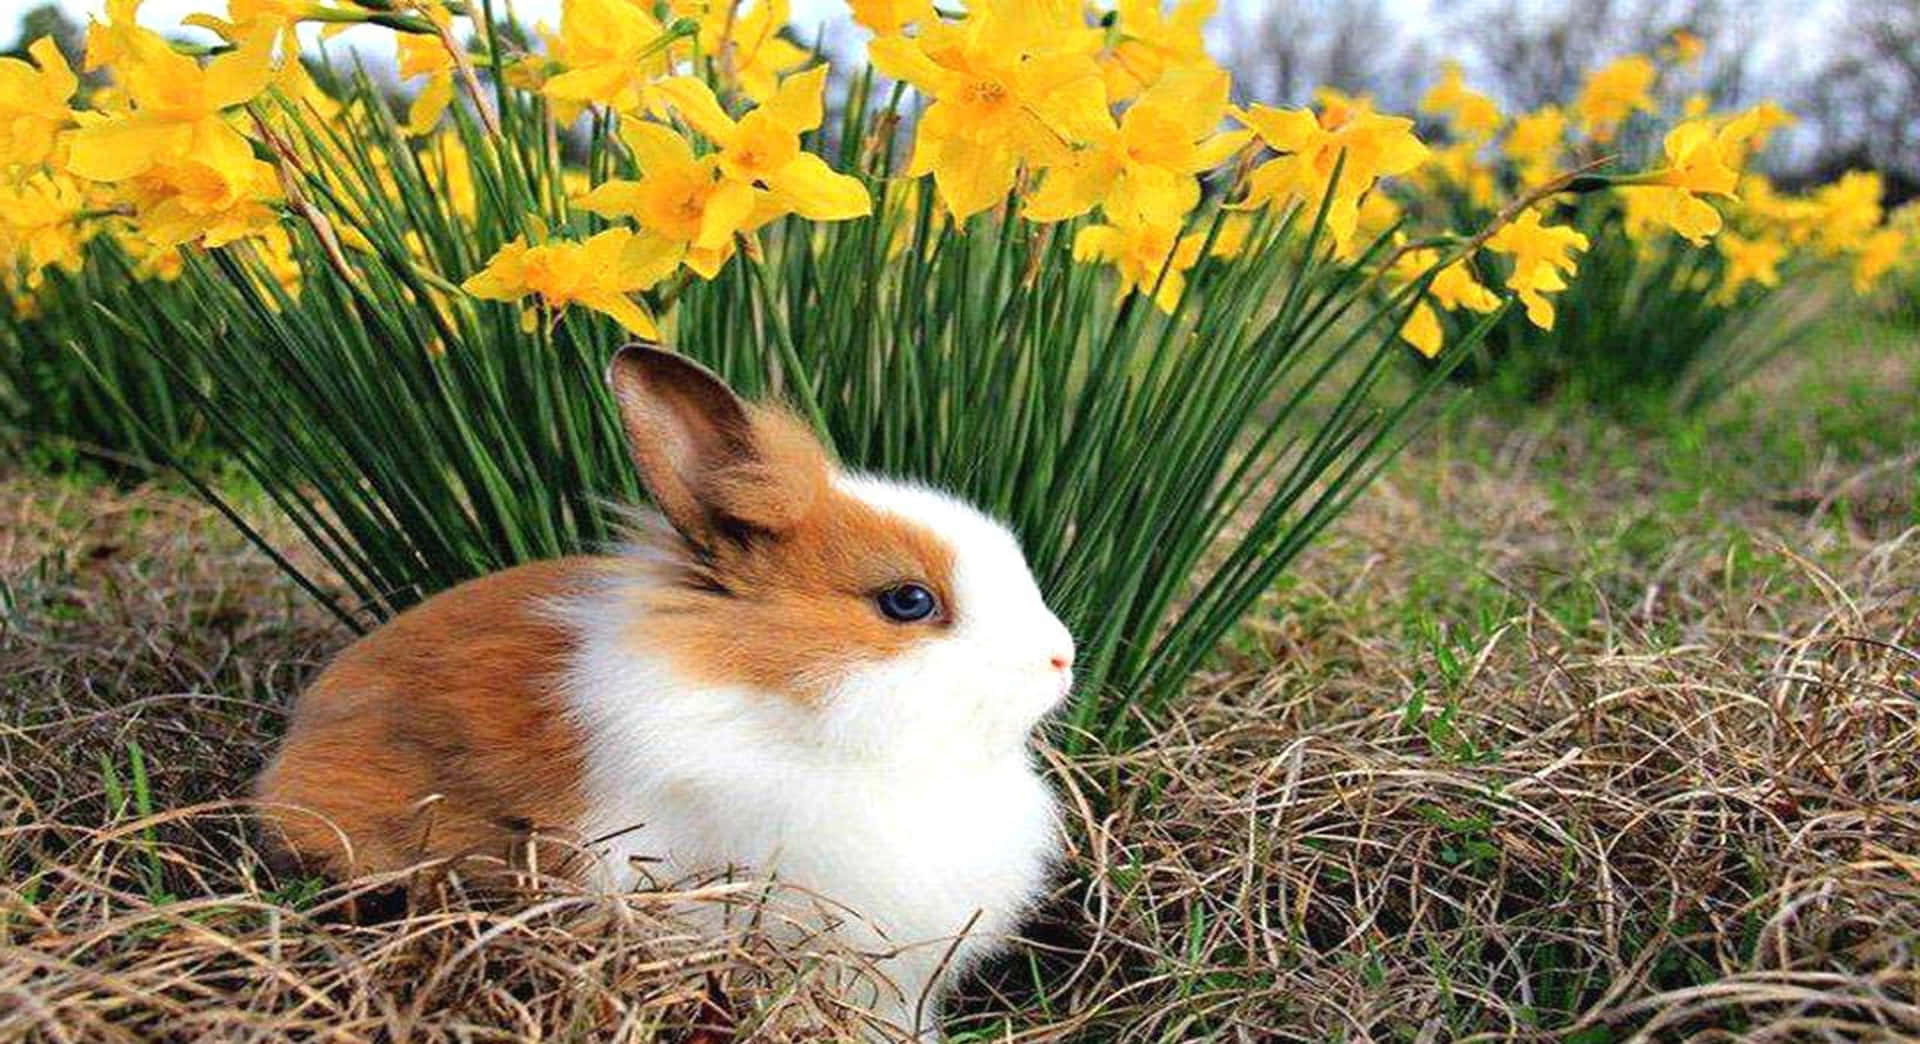 Cute Animal Rabbit Picture